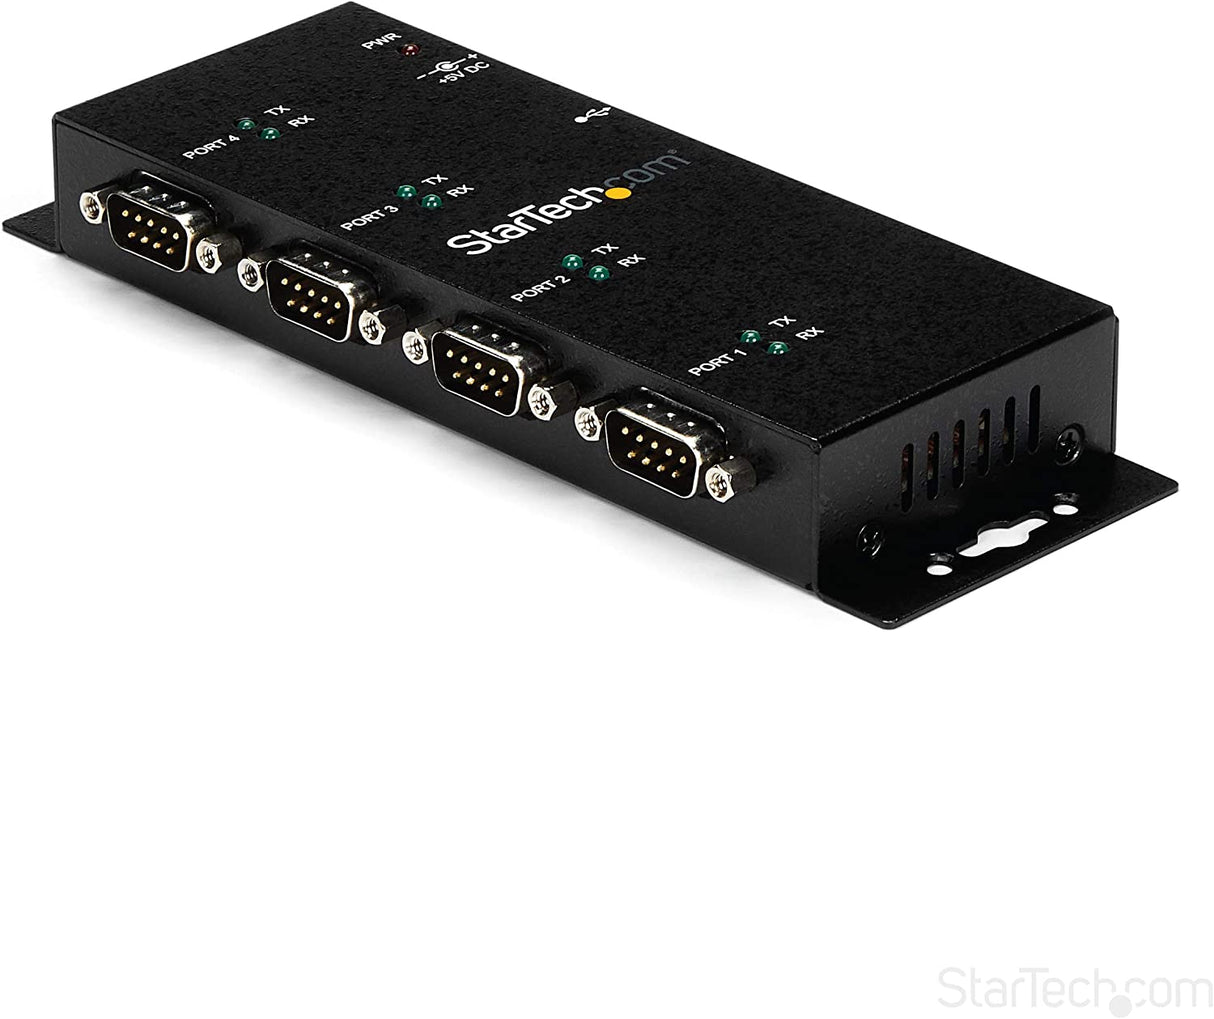 StarTech.com 4 Port USB to Serial RS232 Adapter - Wall Mount - Din Rail - COM Port Retention - FTDI USB to DB9 RS232 Hub (ICUSB2324I) 4 Port Industrial Adapter